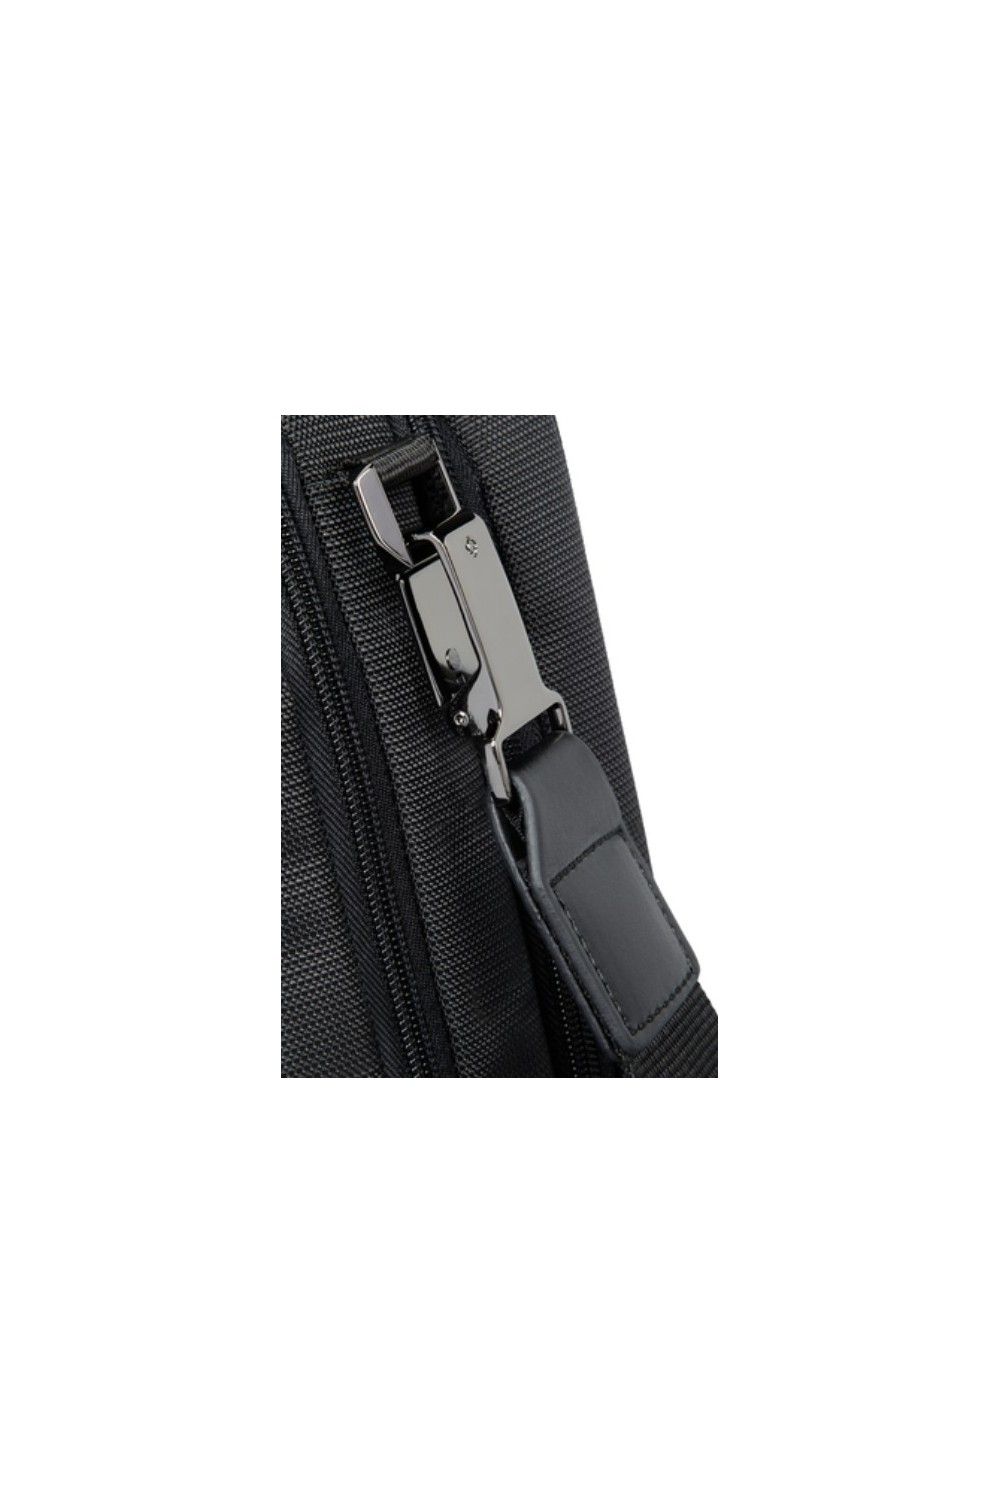 Samsonite briefcase XBR 15.6 inches 2 compartment